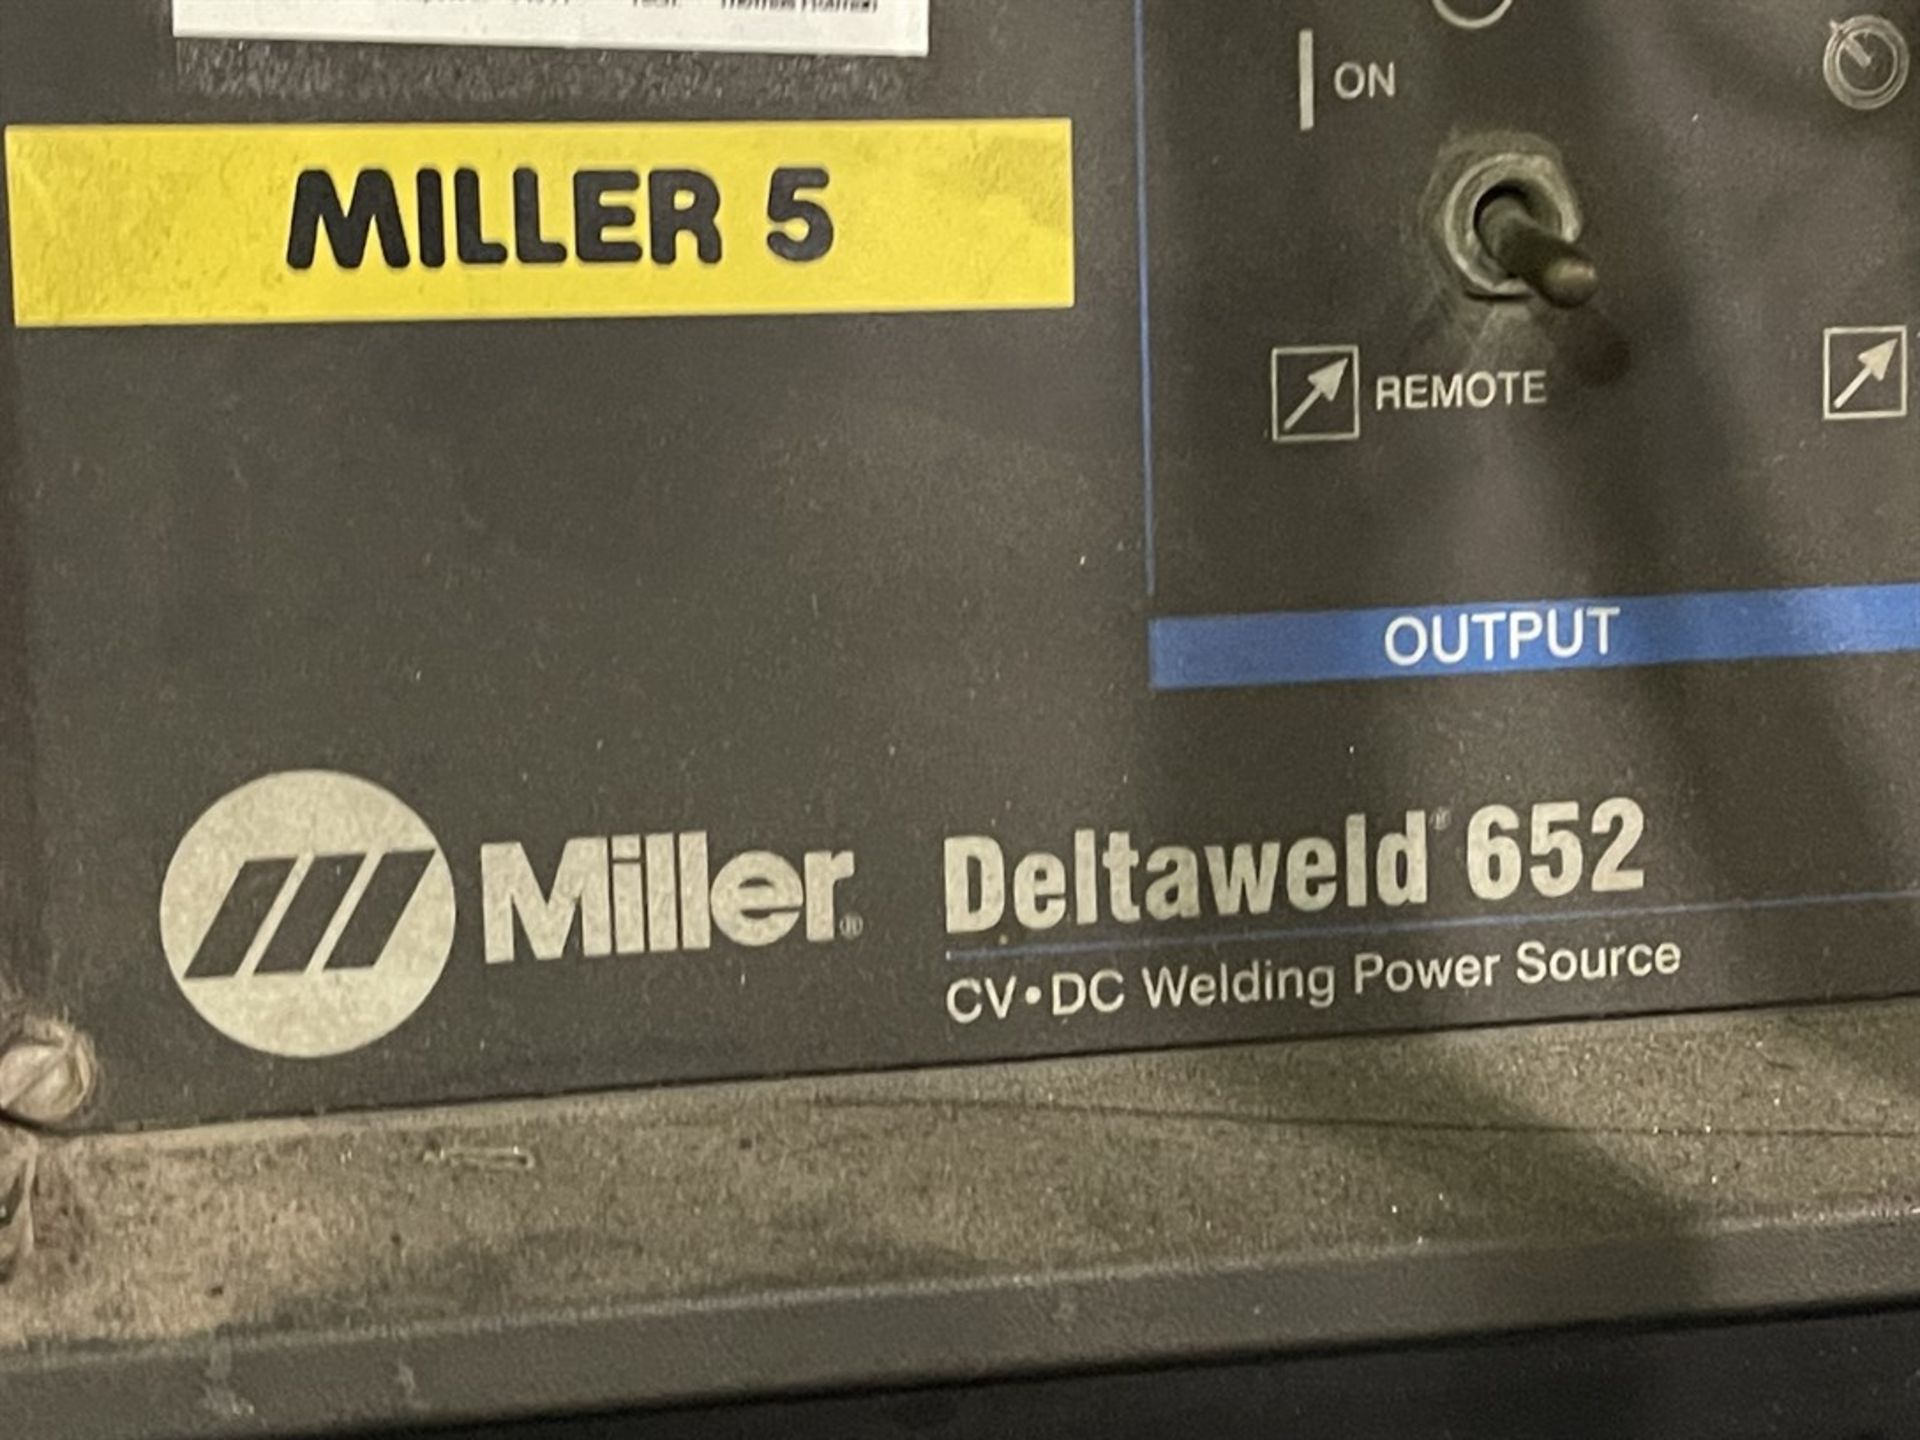 MILLER Deltaweld 652 Welding Power Source, s/n LG460127C, w/ Miller 70 Series Wire Feed - Image 4 of 5